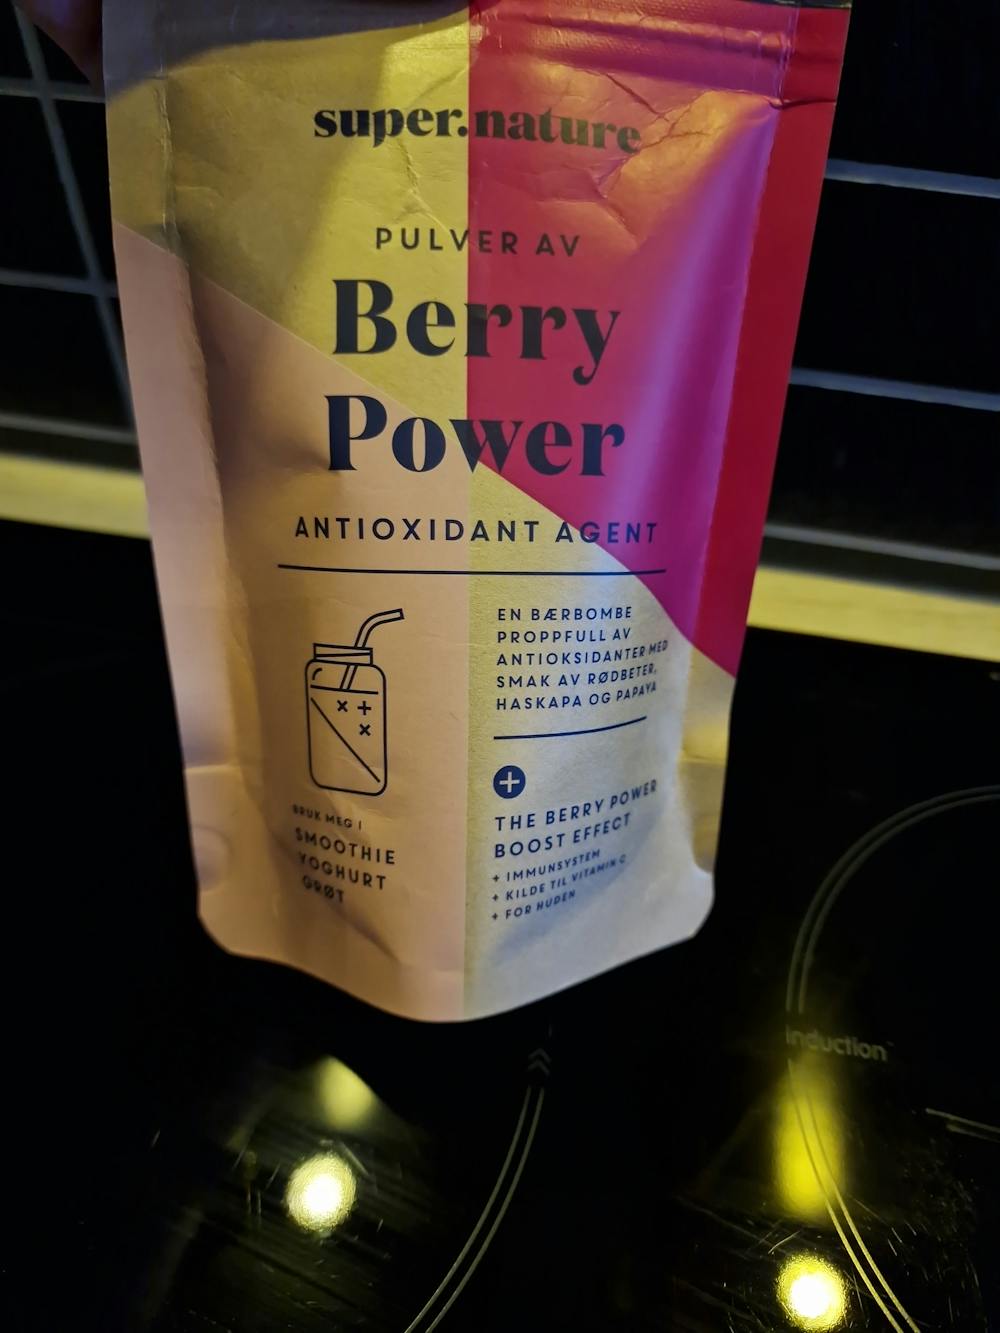 Berry powder, Supernature